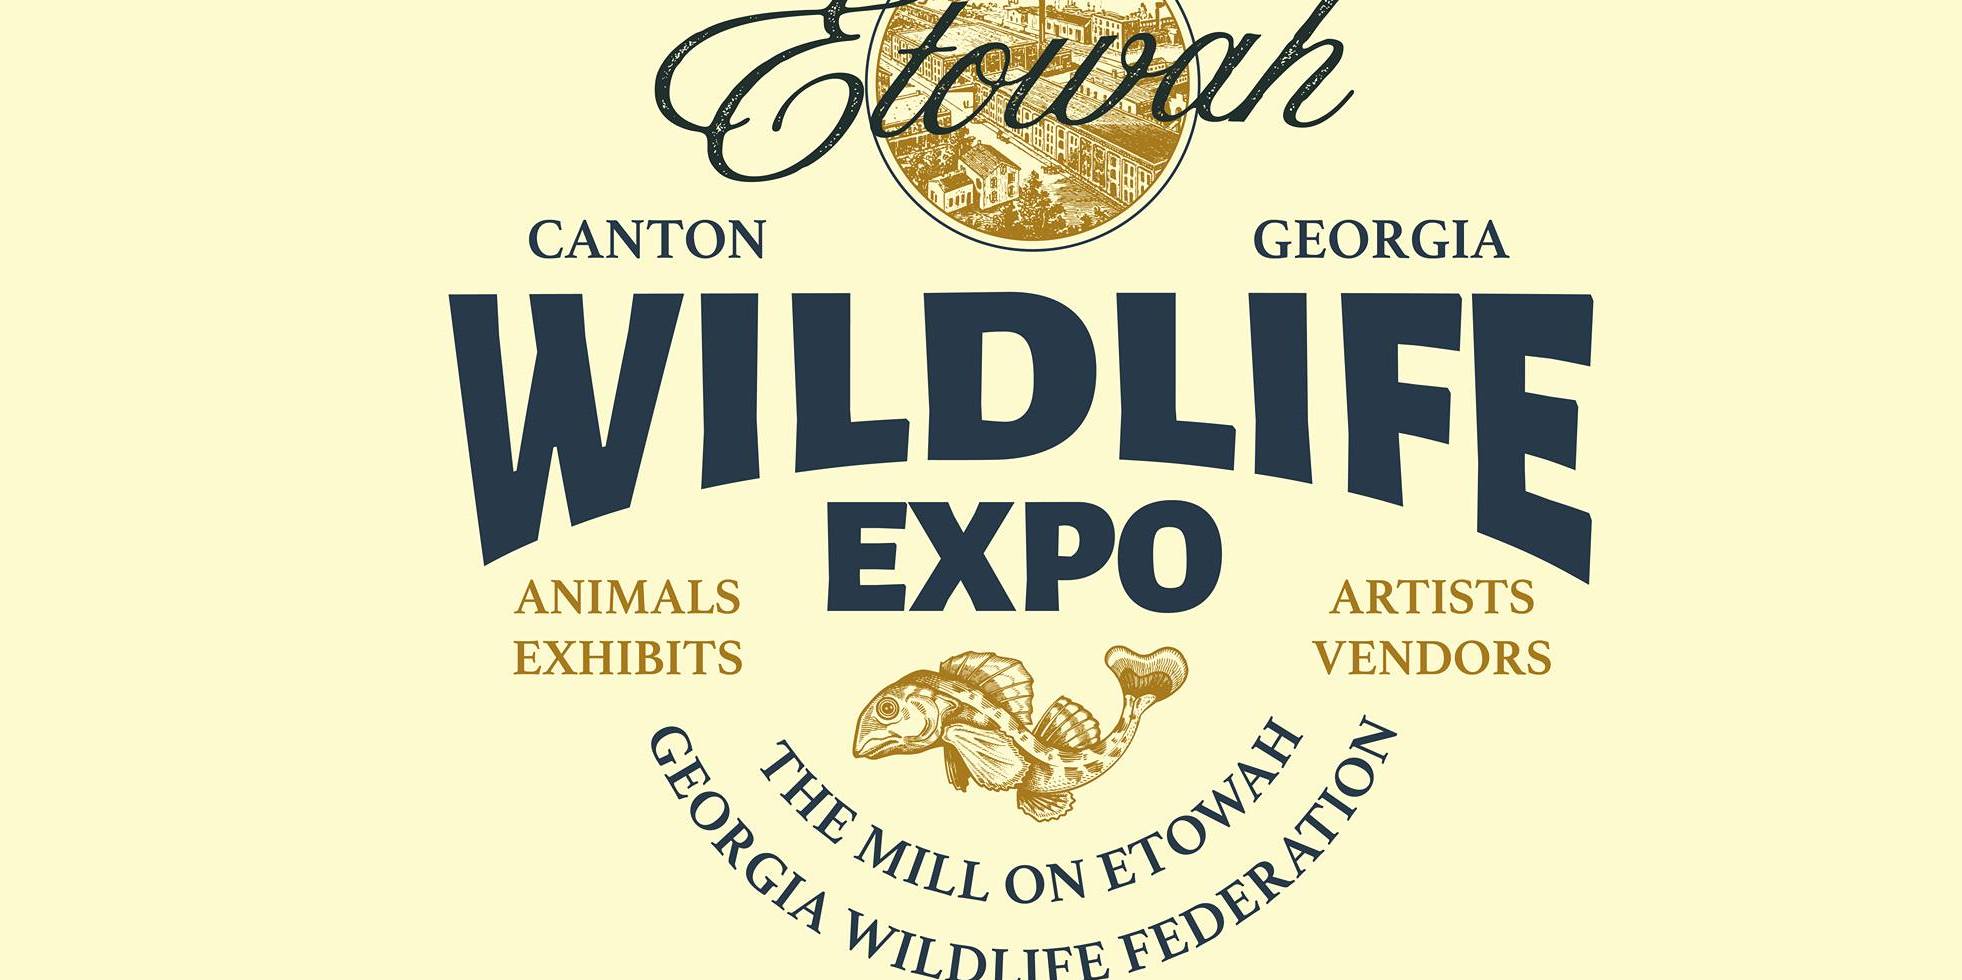 Etowah Wildlife Expo 2021 promotional image